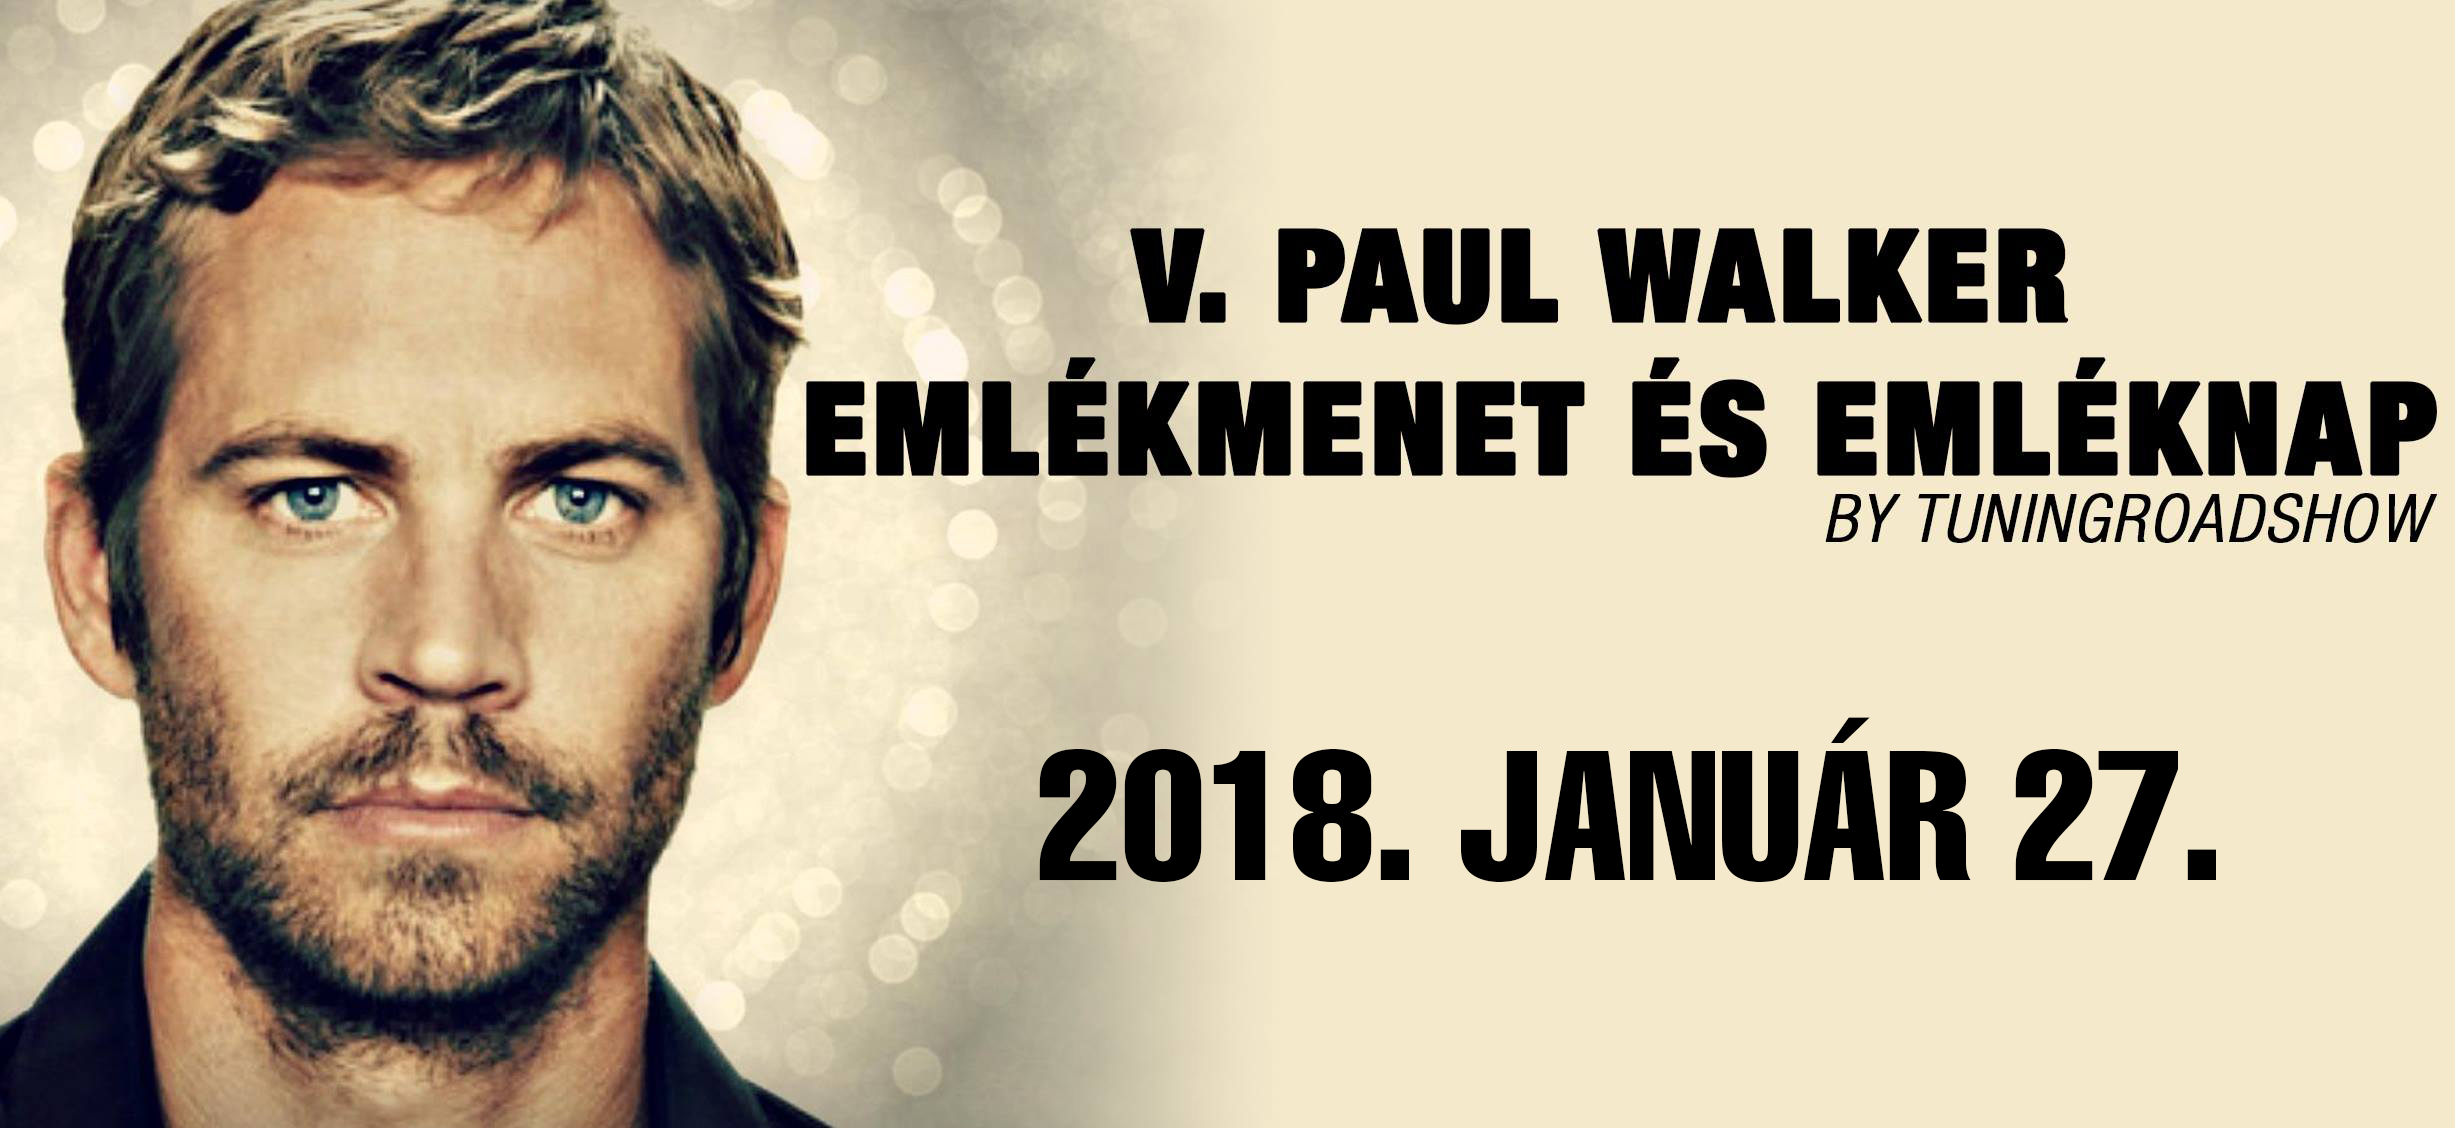 V. Paul Walker emlékmenet és emléknap